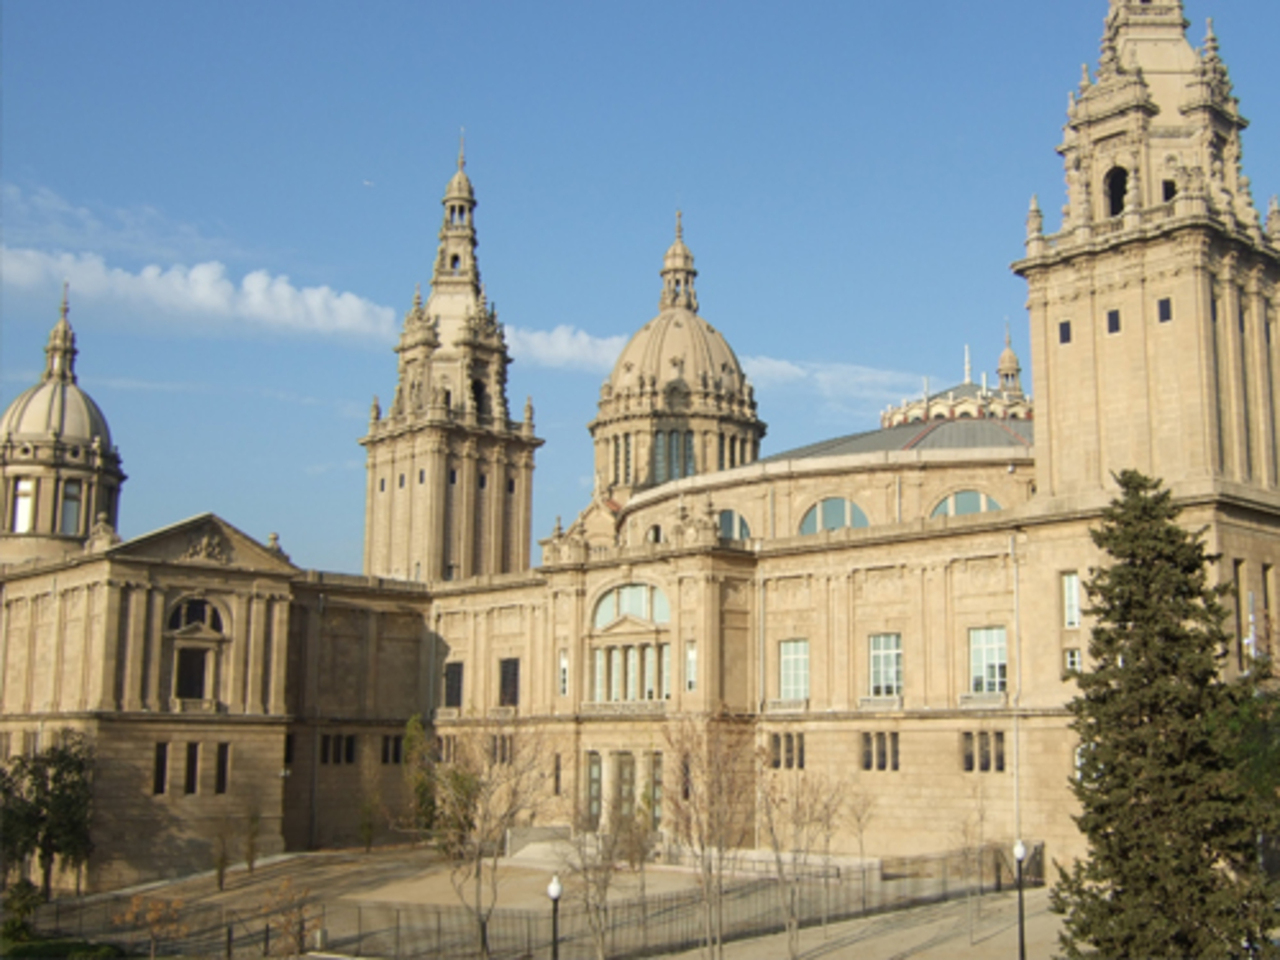 Национальный музей искусства Каталонии
http://www.hispana.ru/?page=object&infoID=11&objectID=137 Наталия_Н